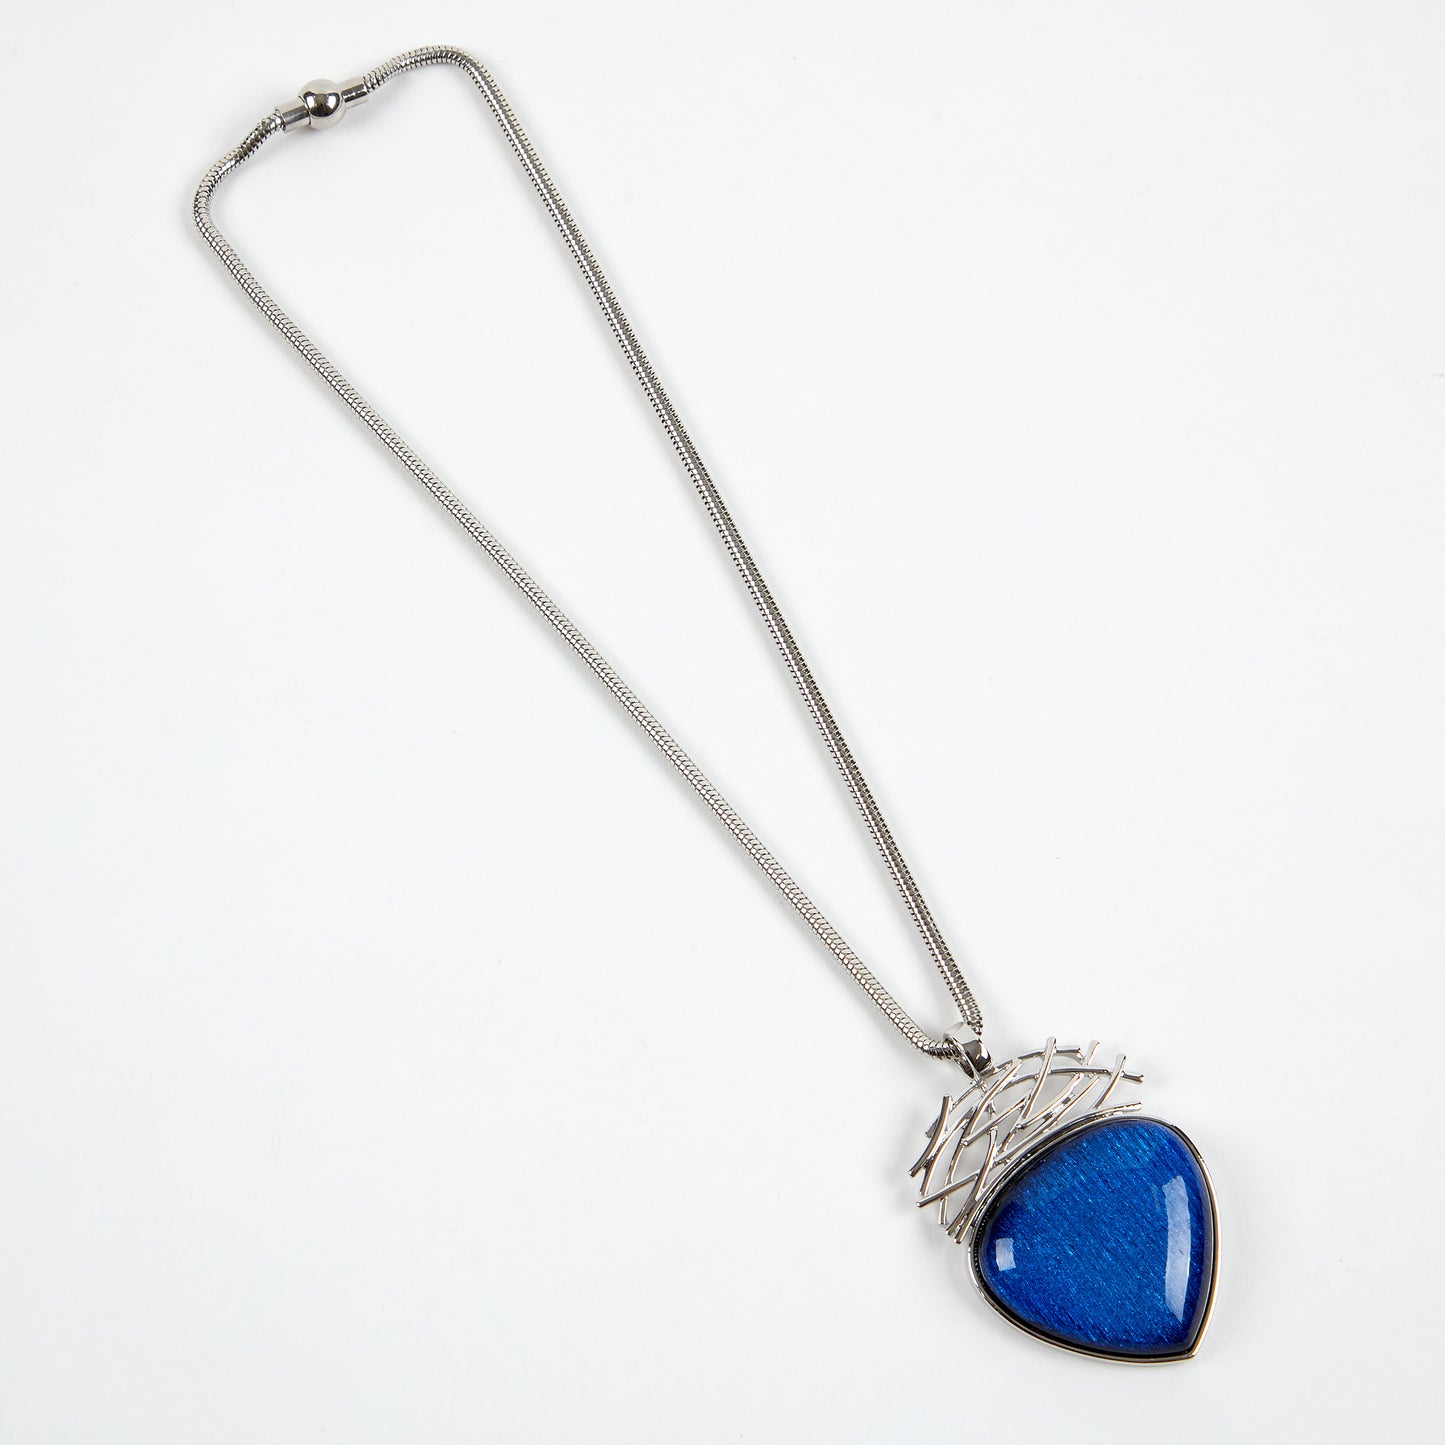 Dante Blue stone pendant necklace